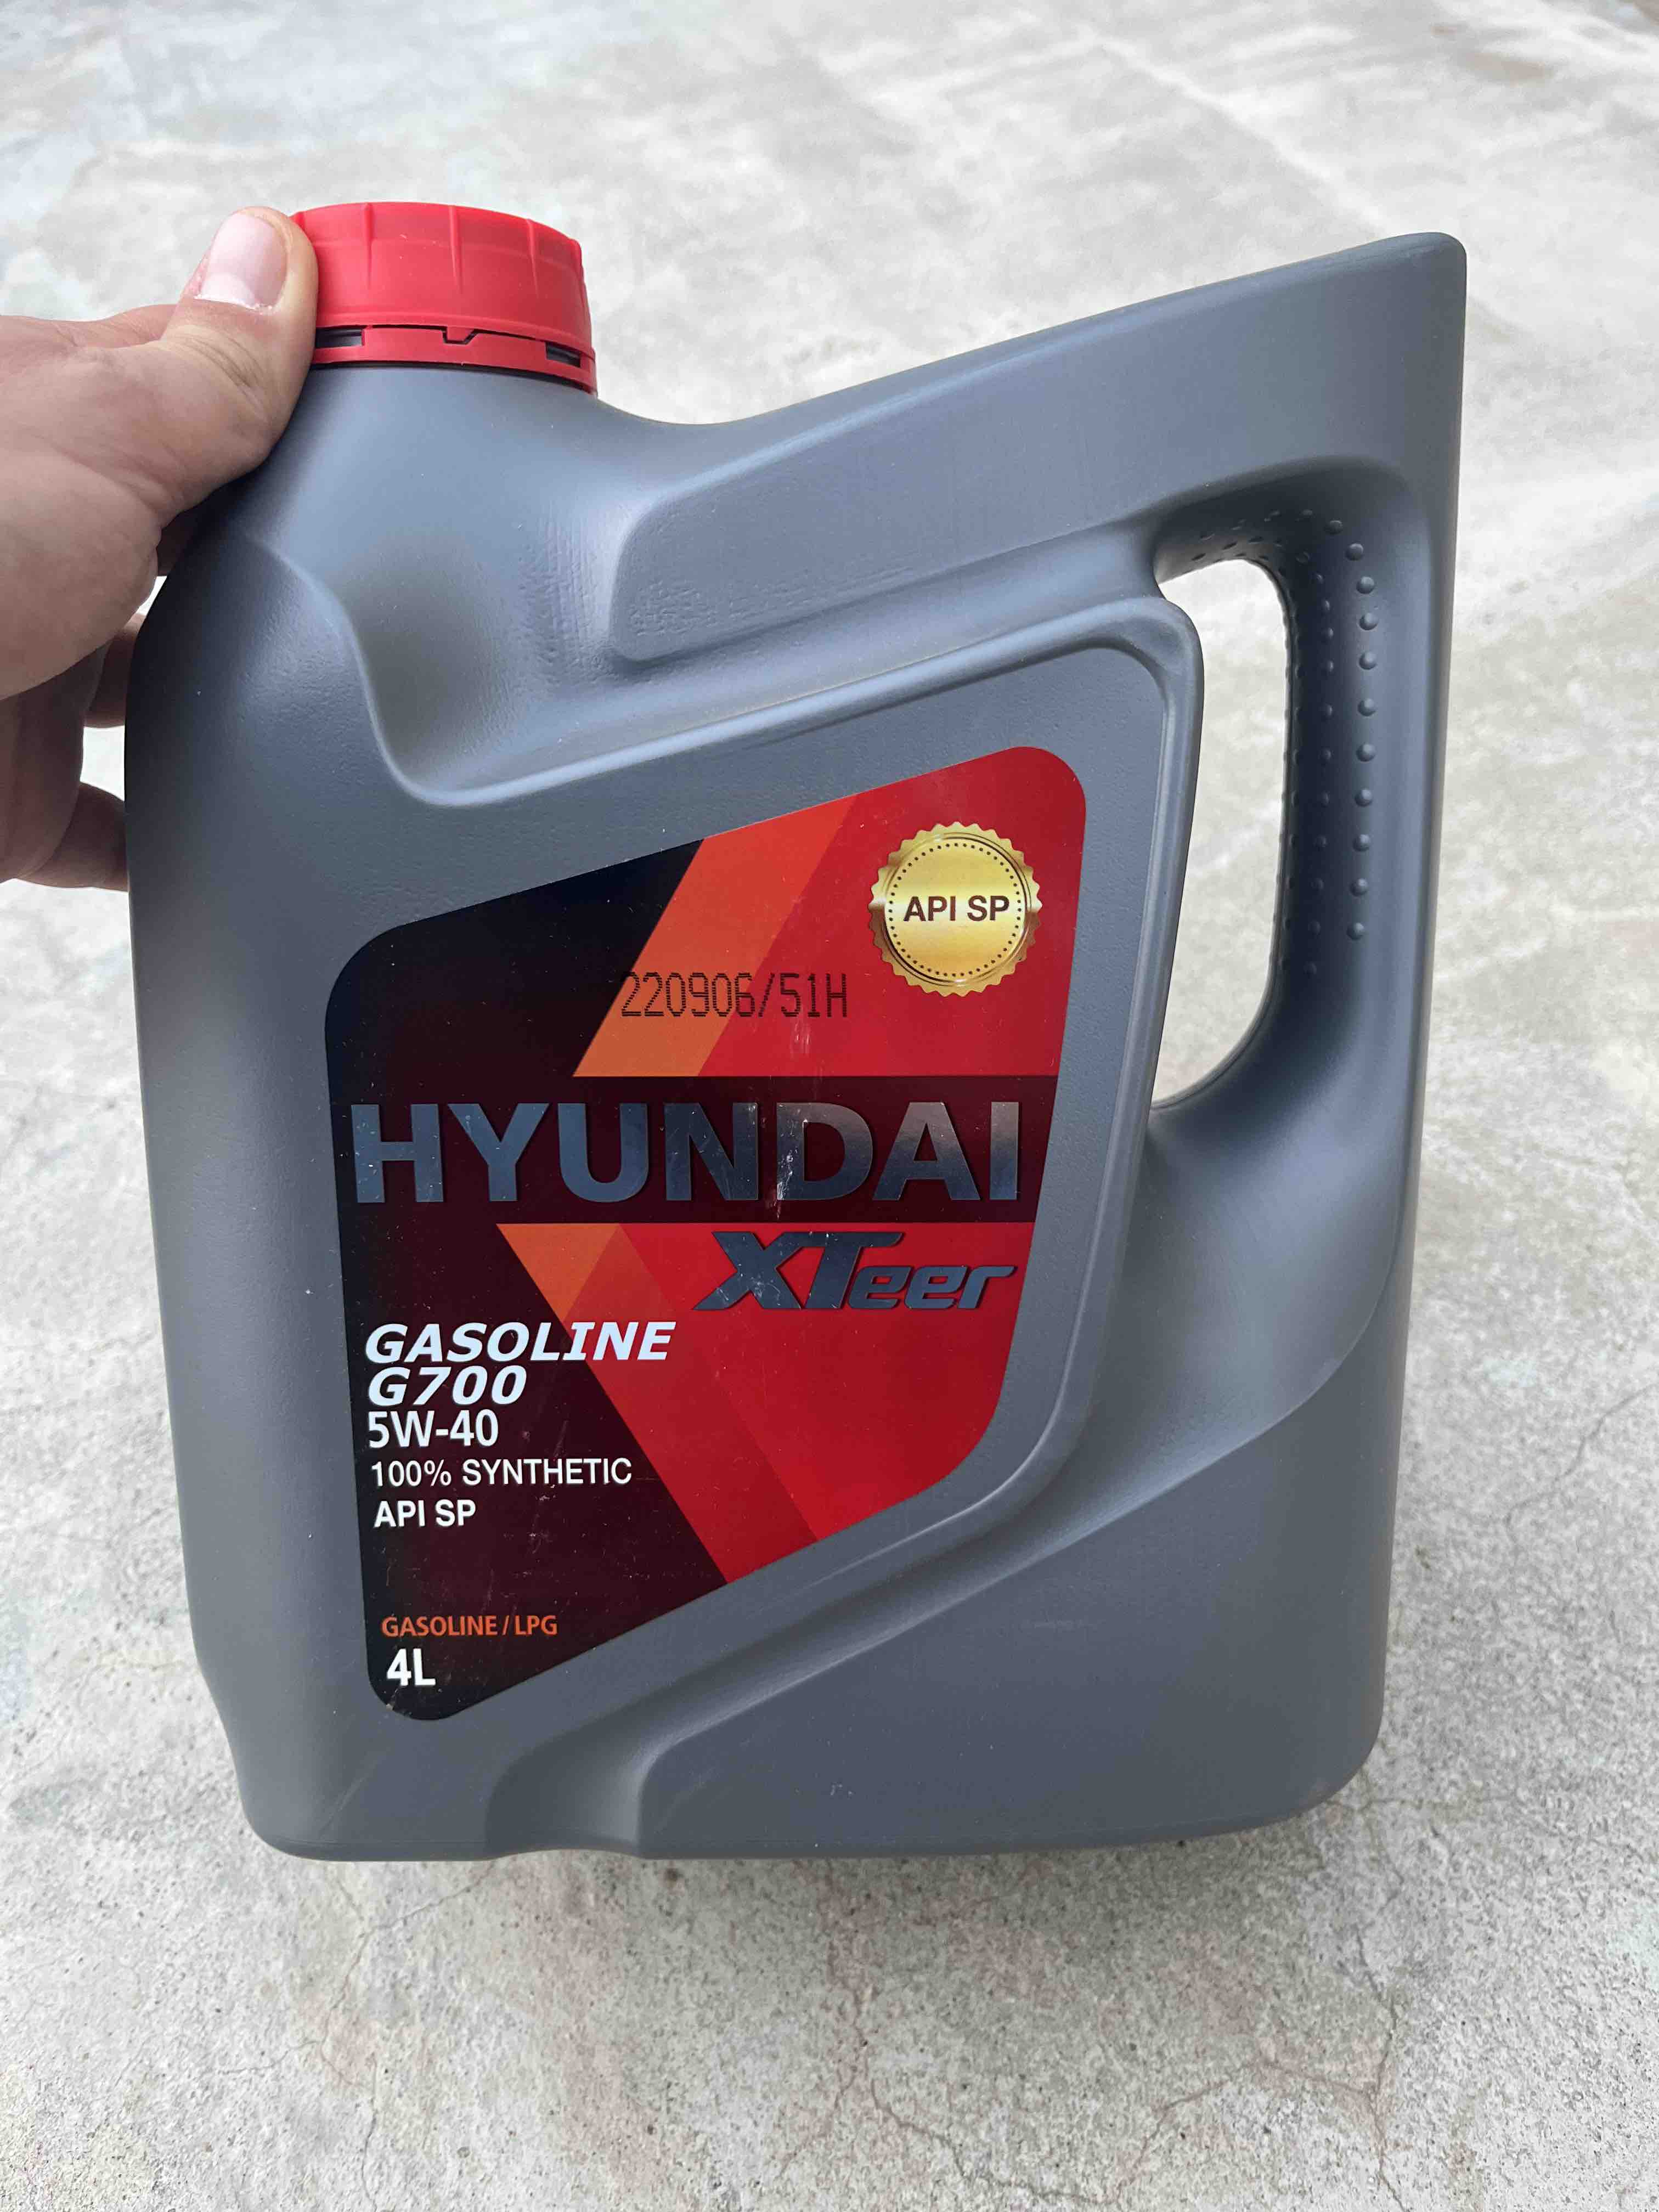 Hyundai xteer gasoline 5w 30. 1051237 Hyundai XTEER. 1011435 Hyundai XTEER. Hyundai XTEER : 1121014. Hyundai XTEER 1041126 Hyundai XTEER (g800) gasoline Ultra Protection.